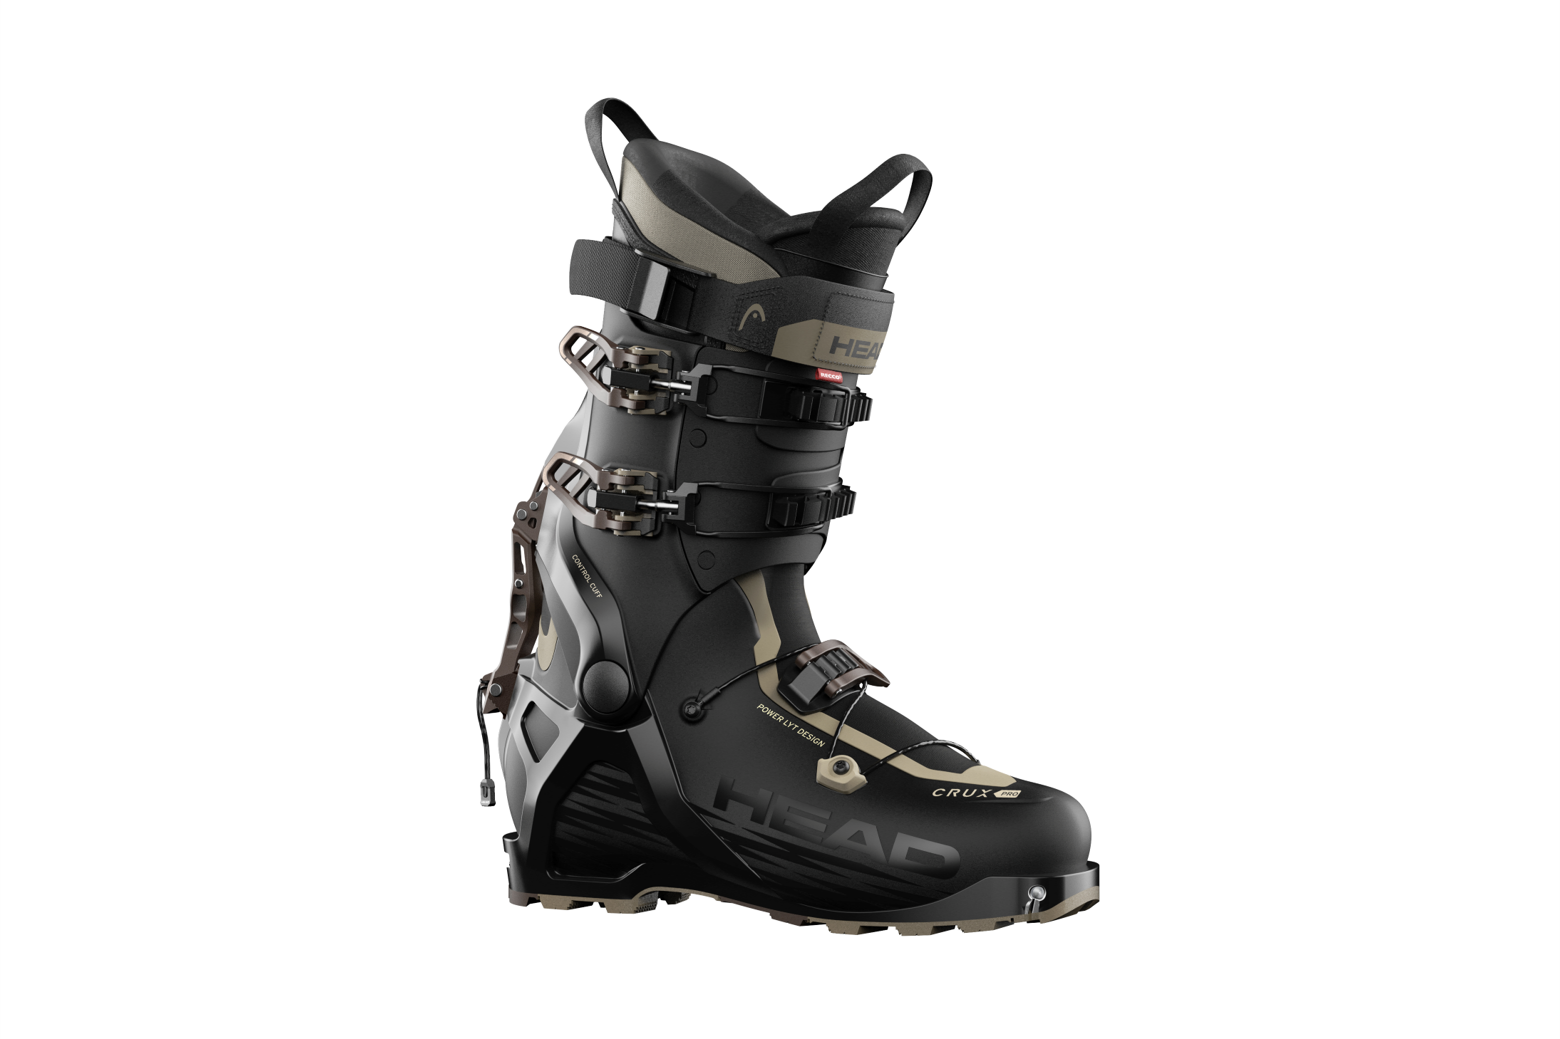 High performance ski boot from Head Ski using Pebax materials